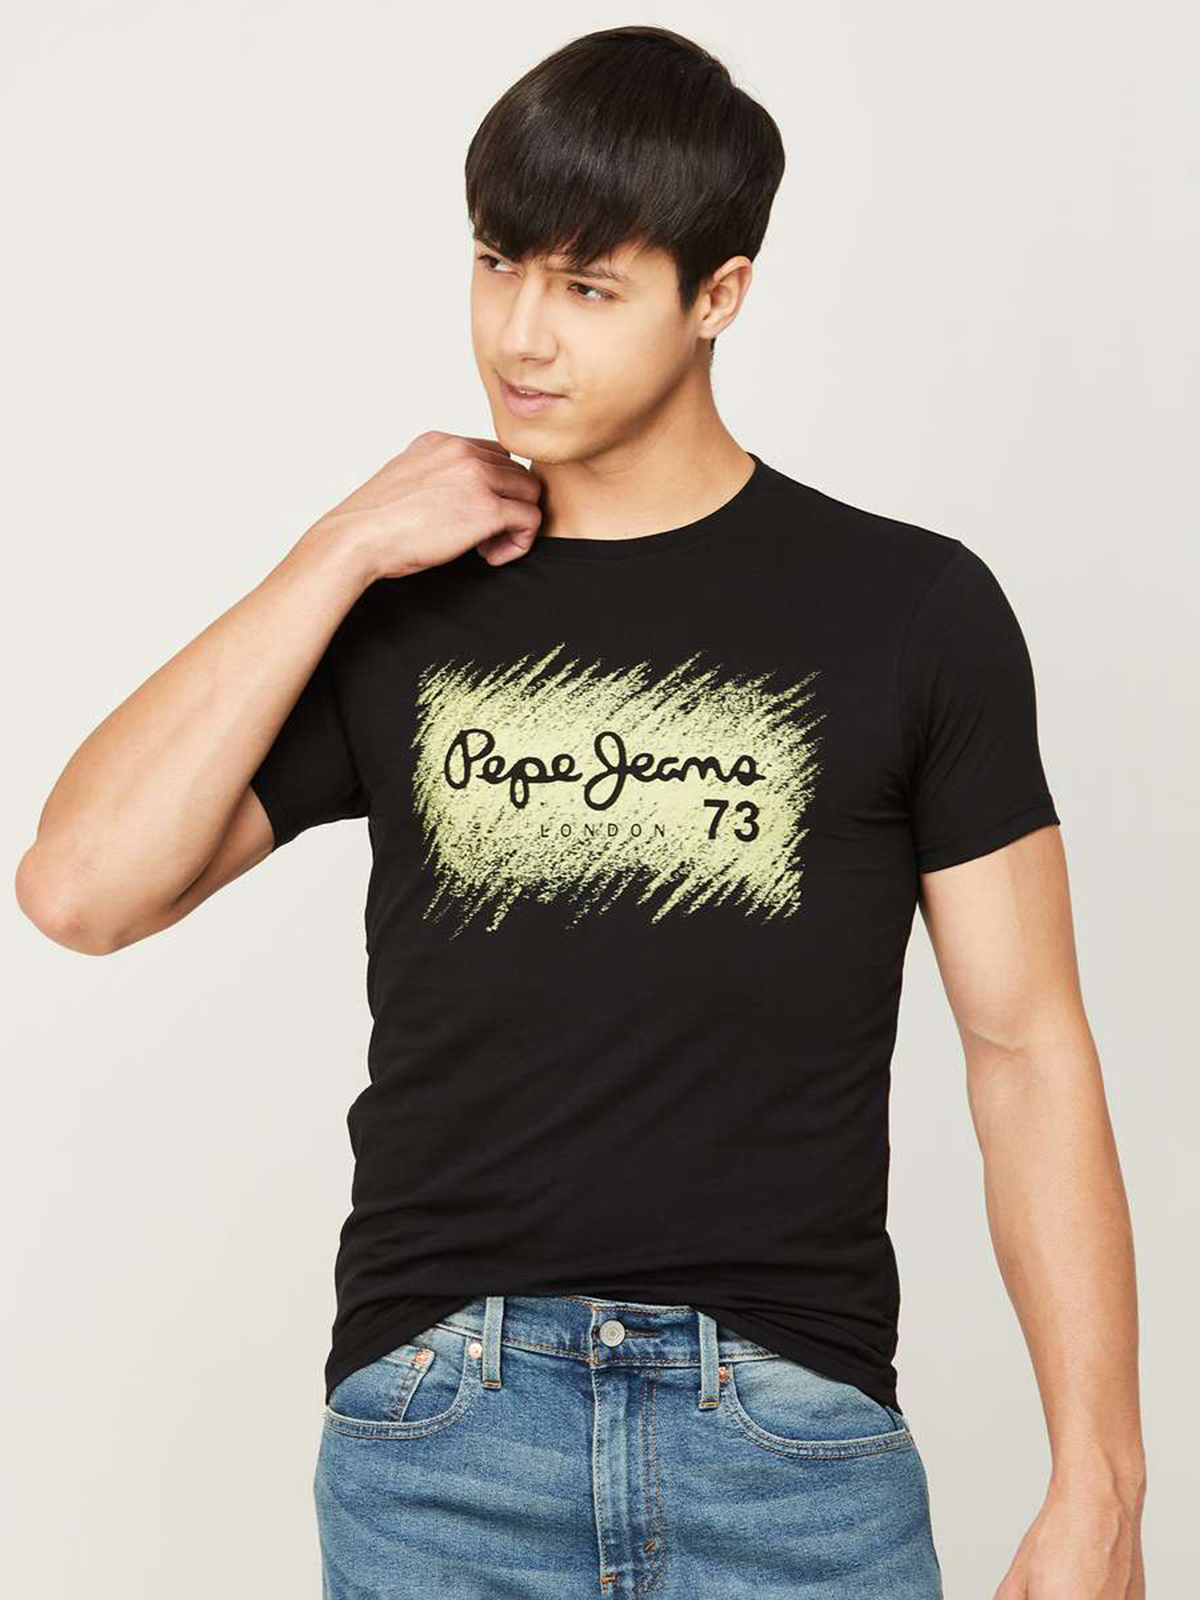 Pepe Jeans black t shirt - G3-MTS15414 printed